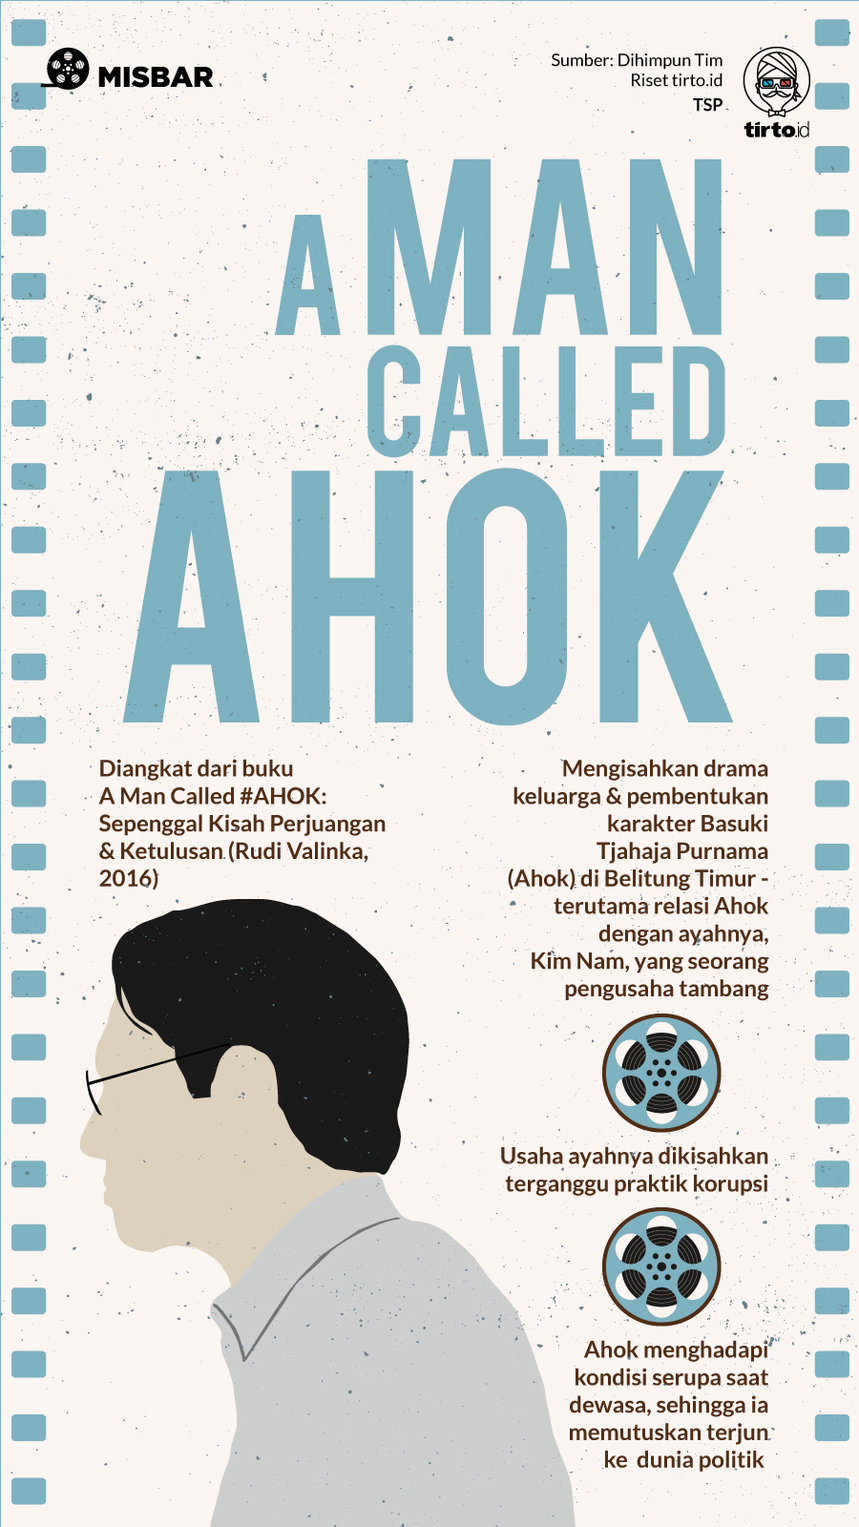 A Man Called Ahok: Drama "Apolitis" yang Bikin Ahok Keras 